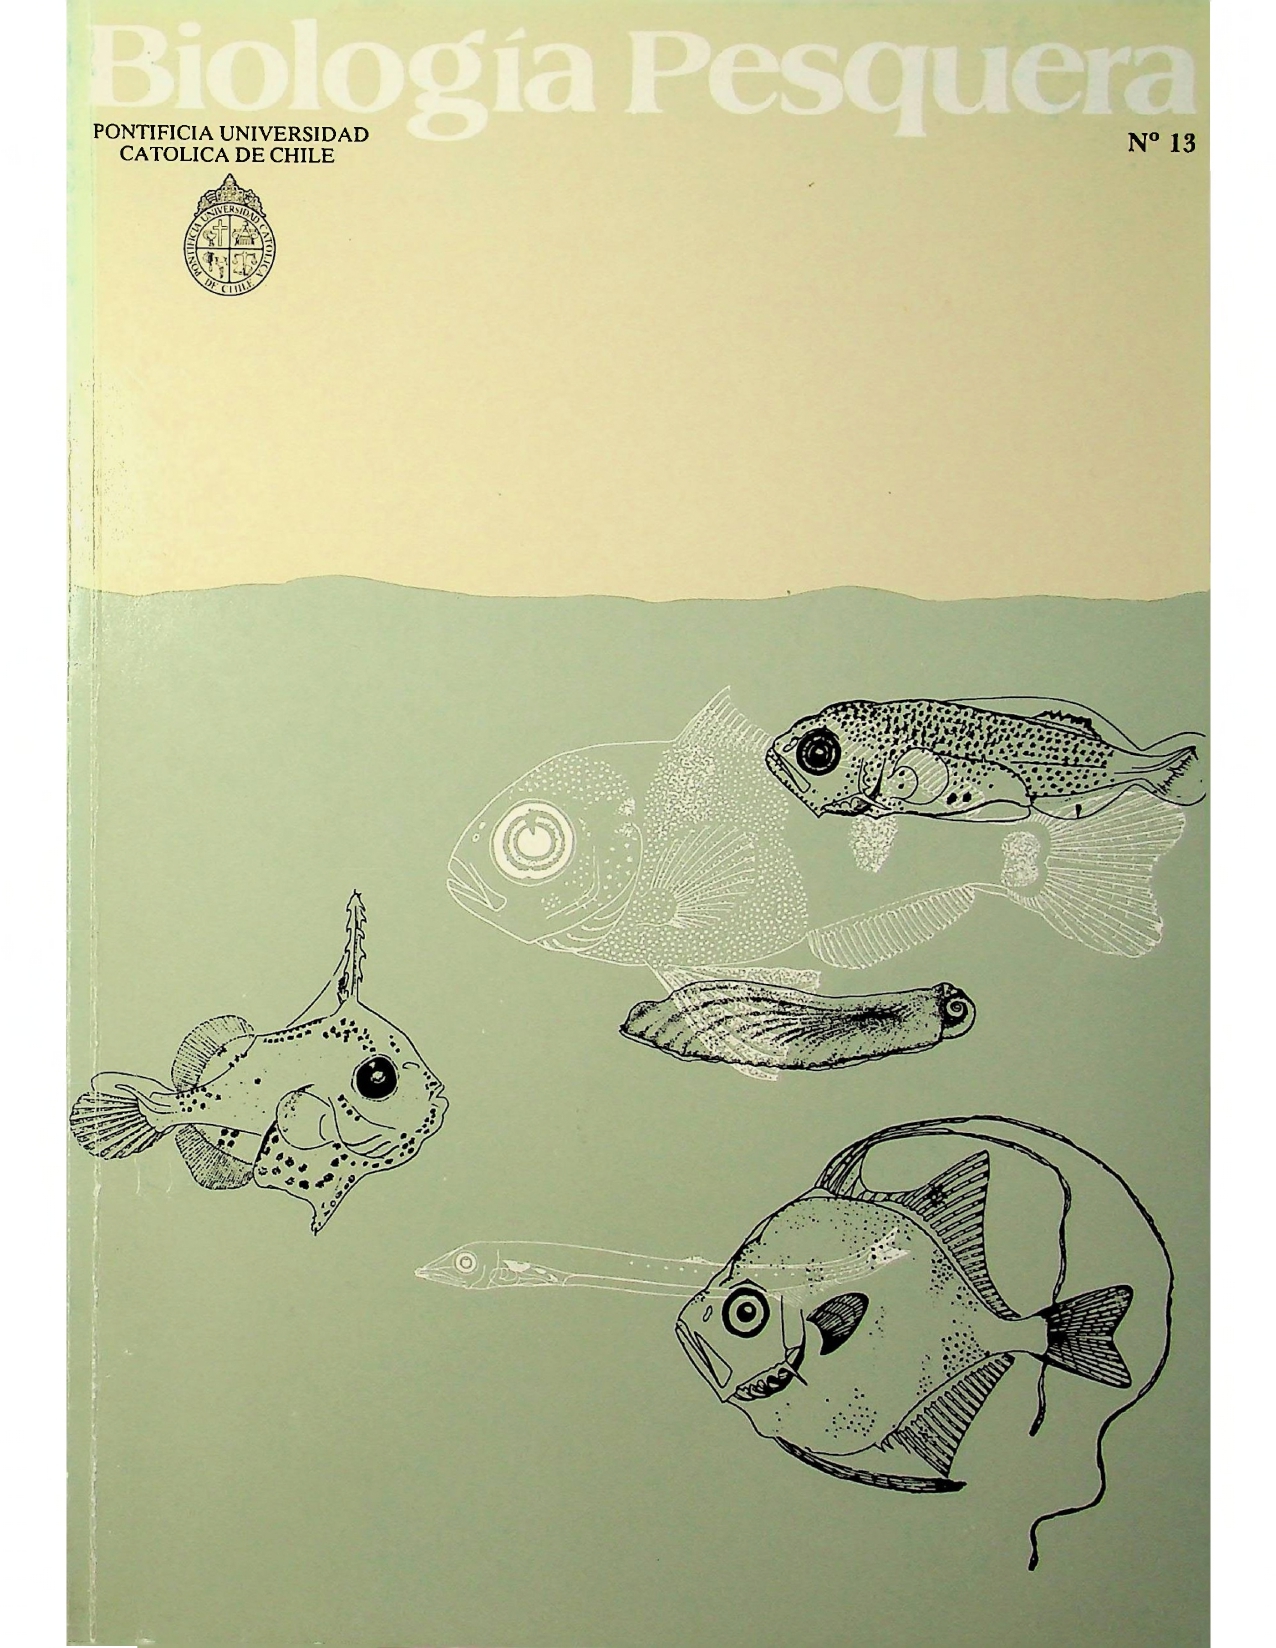 					Ver Núm. 13 (1984): Biología Pesquera
				